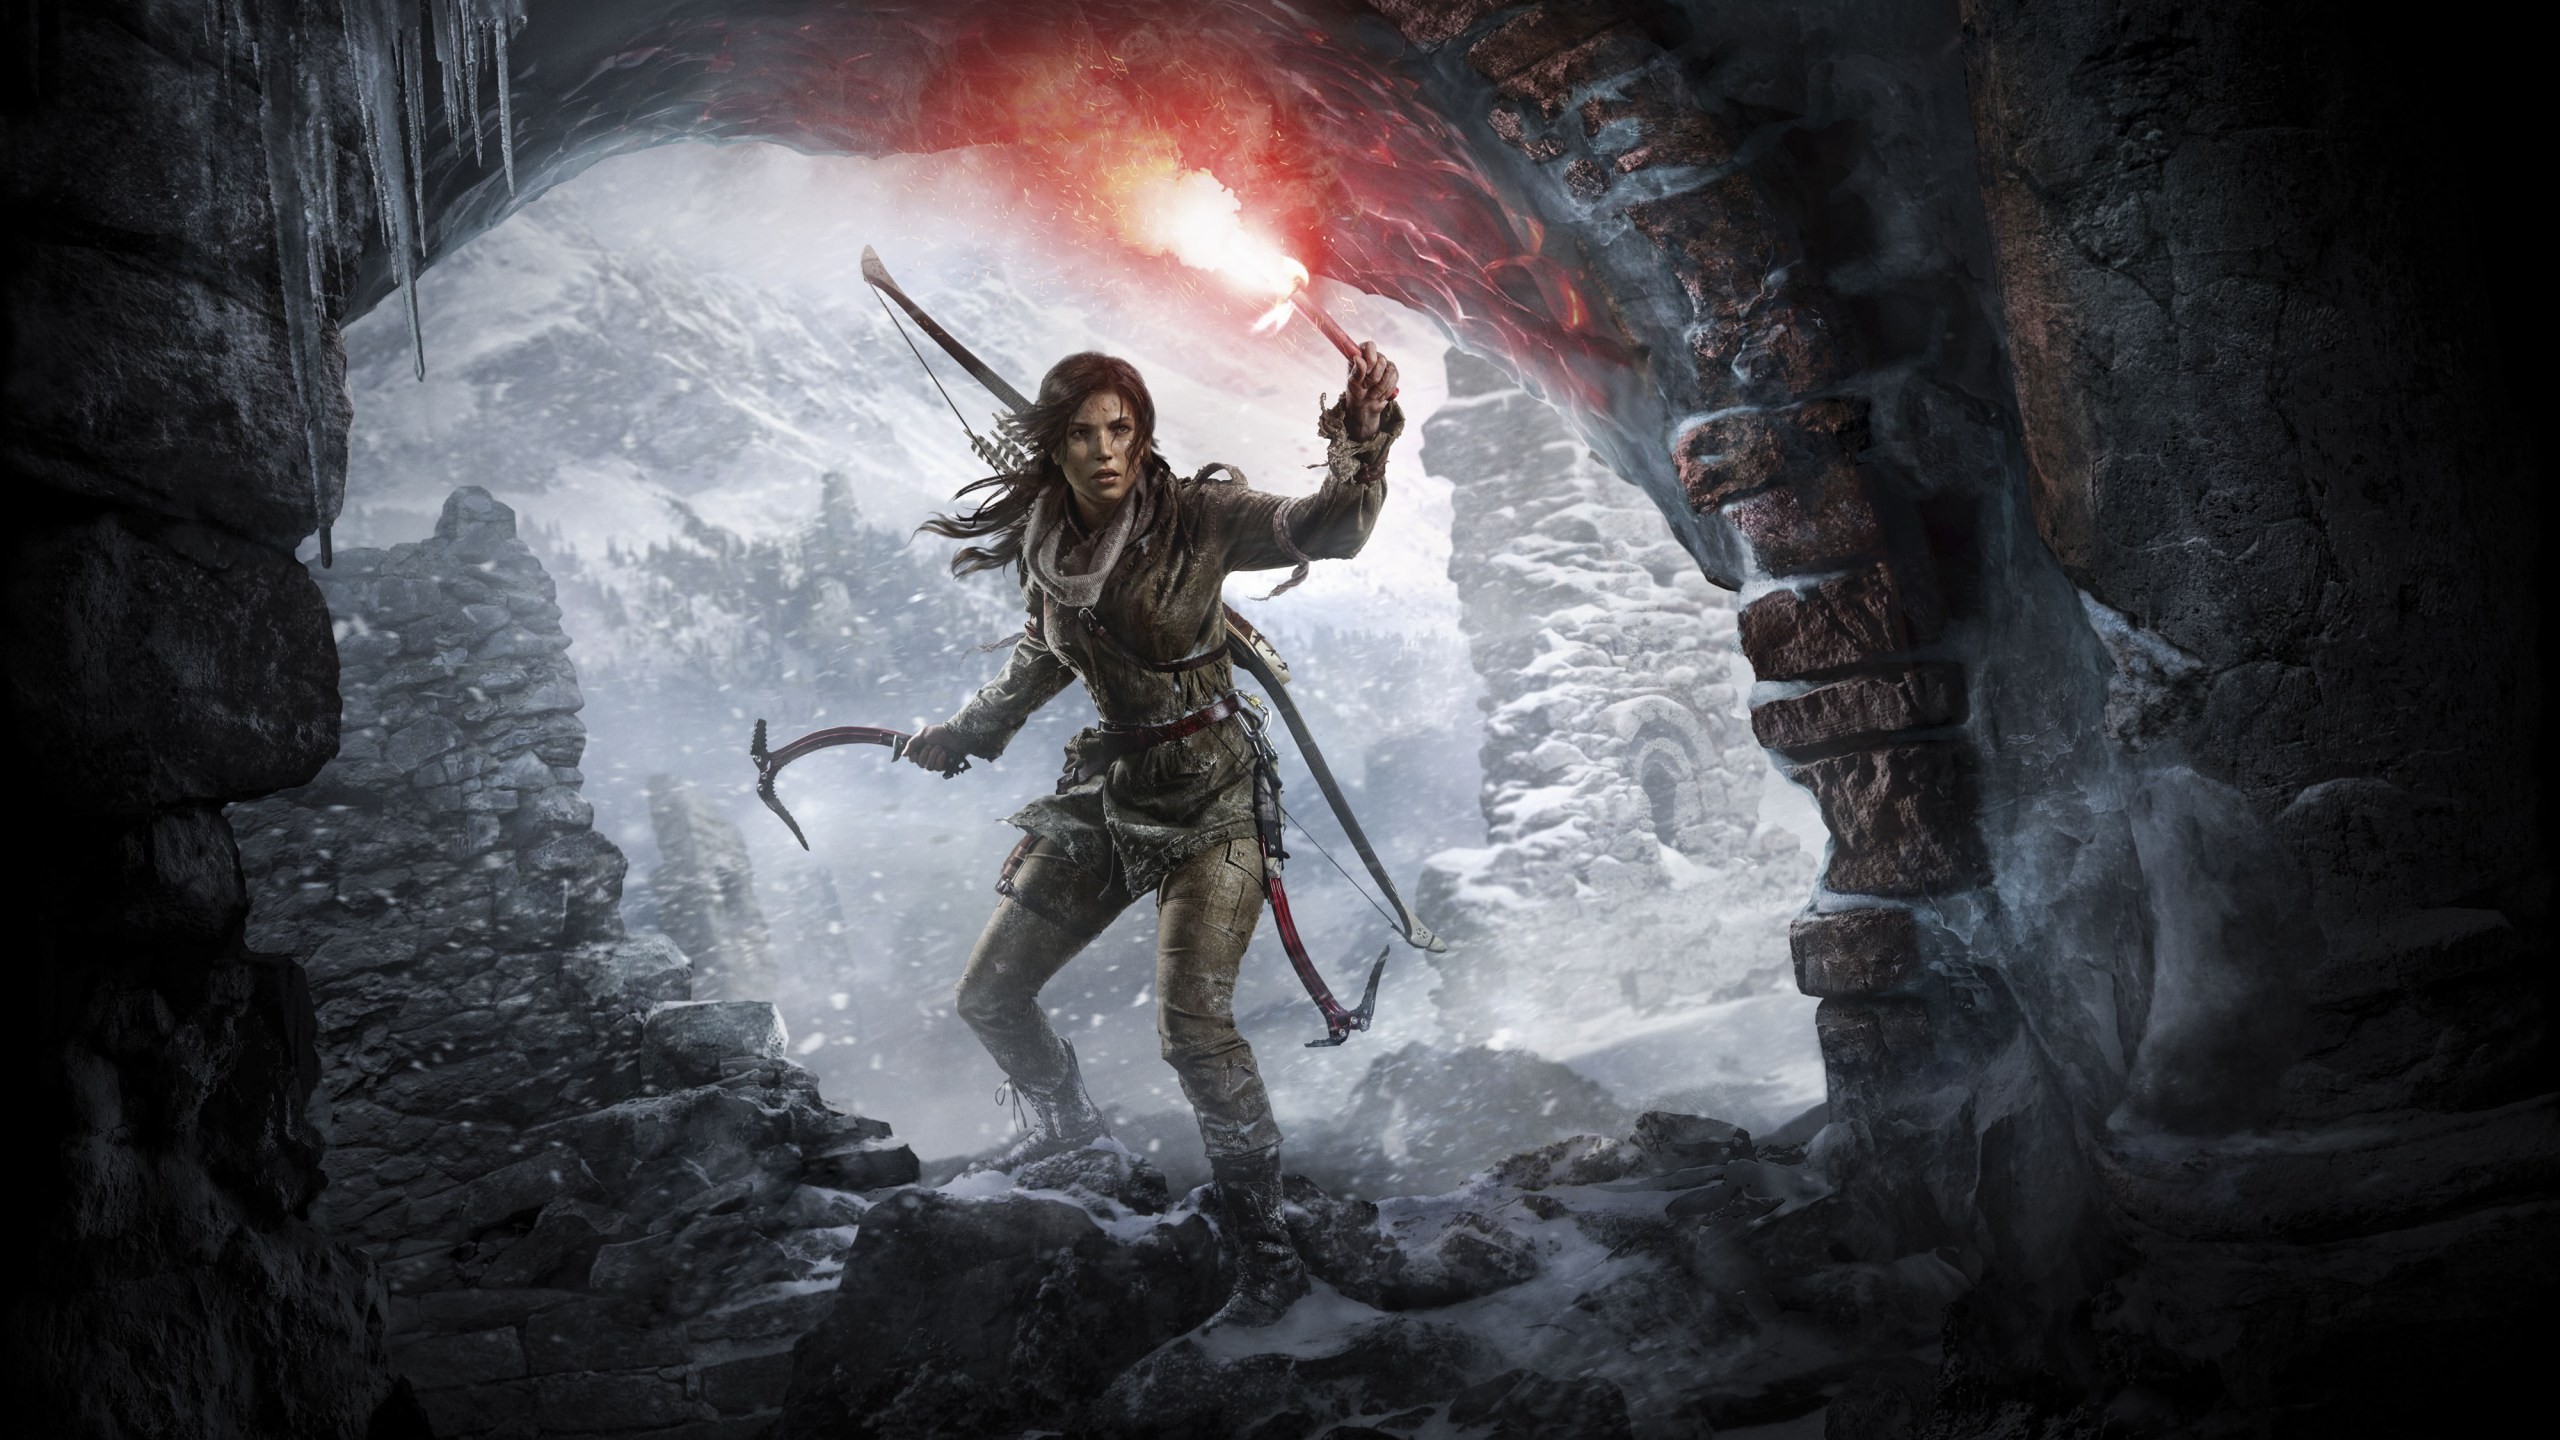 General 2560x1440 Tomb Raider video games Rise of the Tomb Raider PC gaming video game characters video game girls video game art Lara Croft (Tomb Raider) Climbing Hooks adventurers women